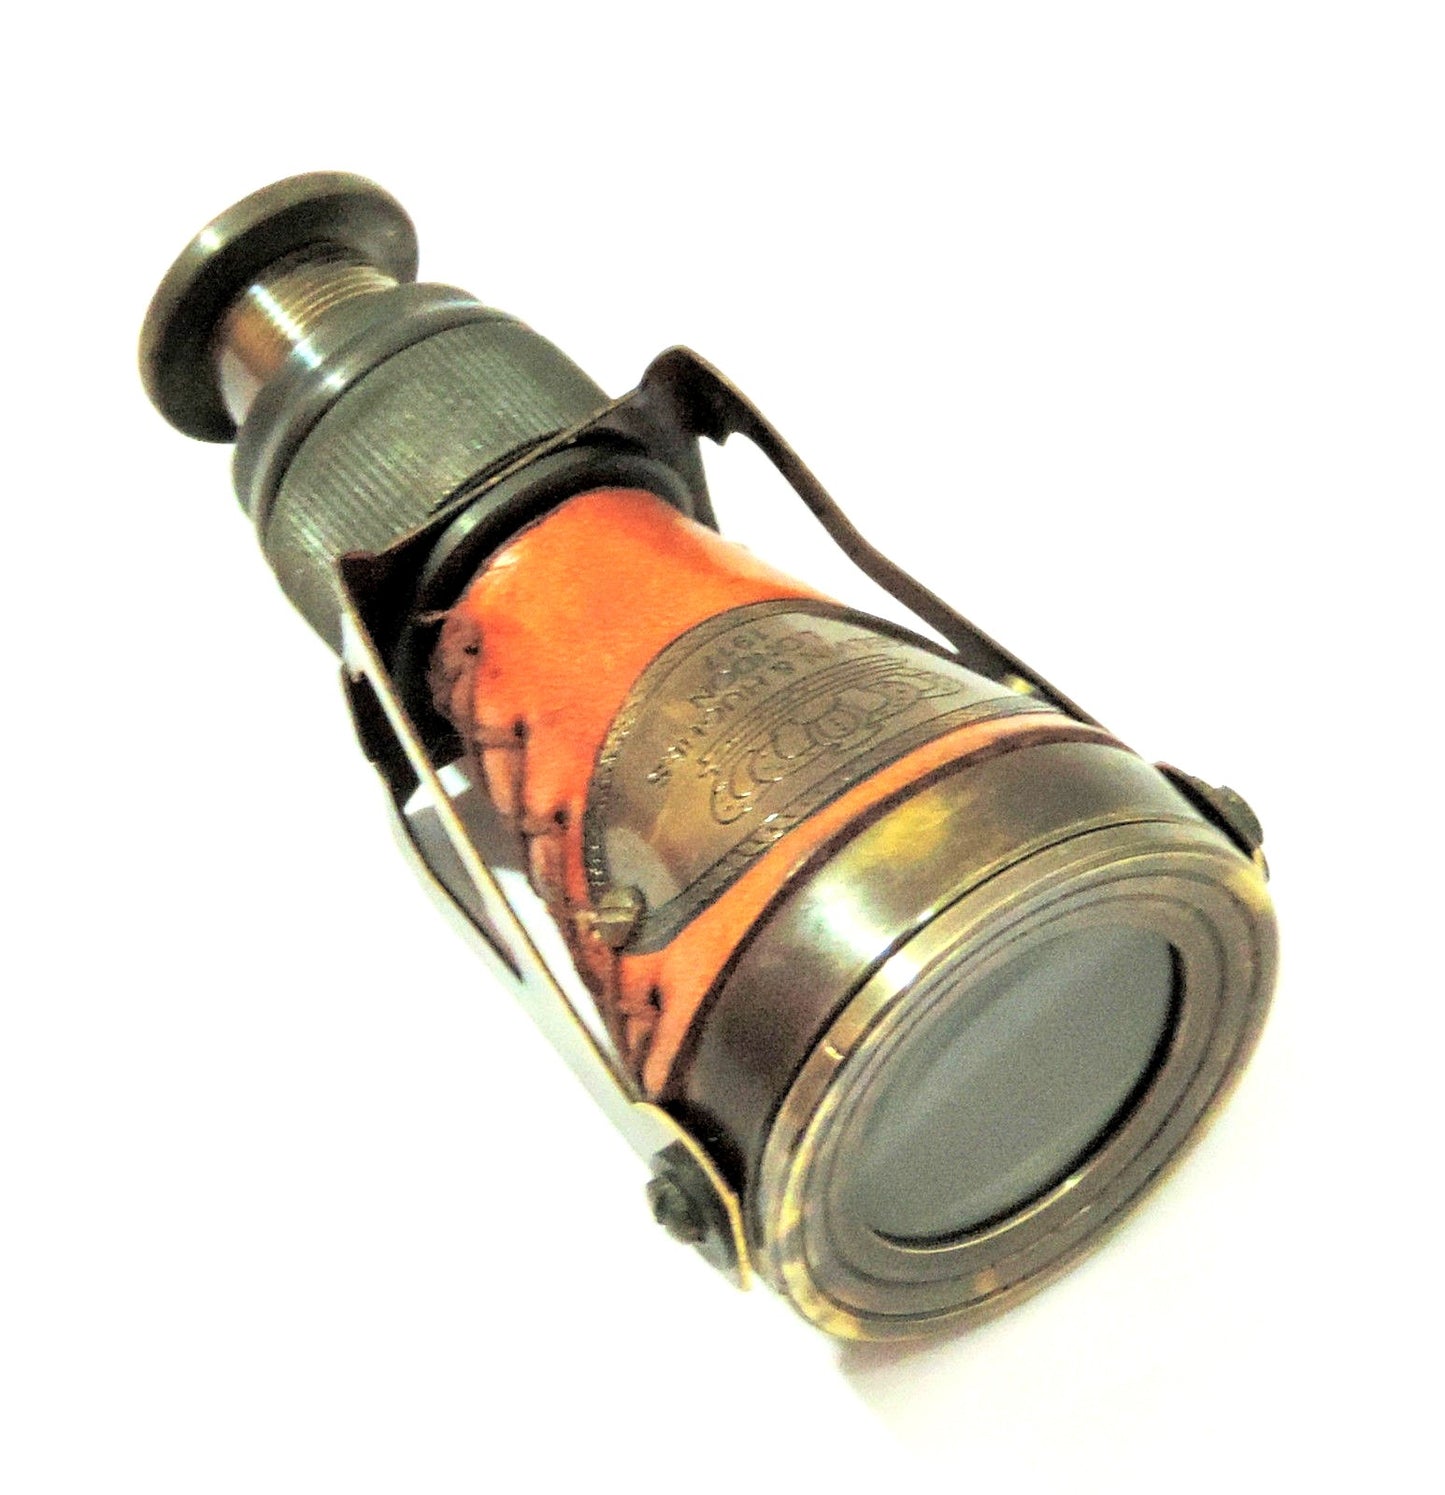 Reiseteleskop Fernglas Monokular im Antik-Stil aus massivem Messing